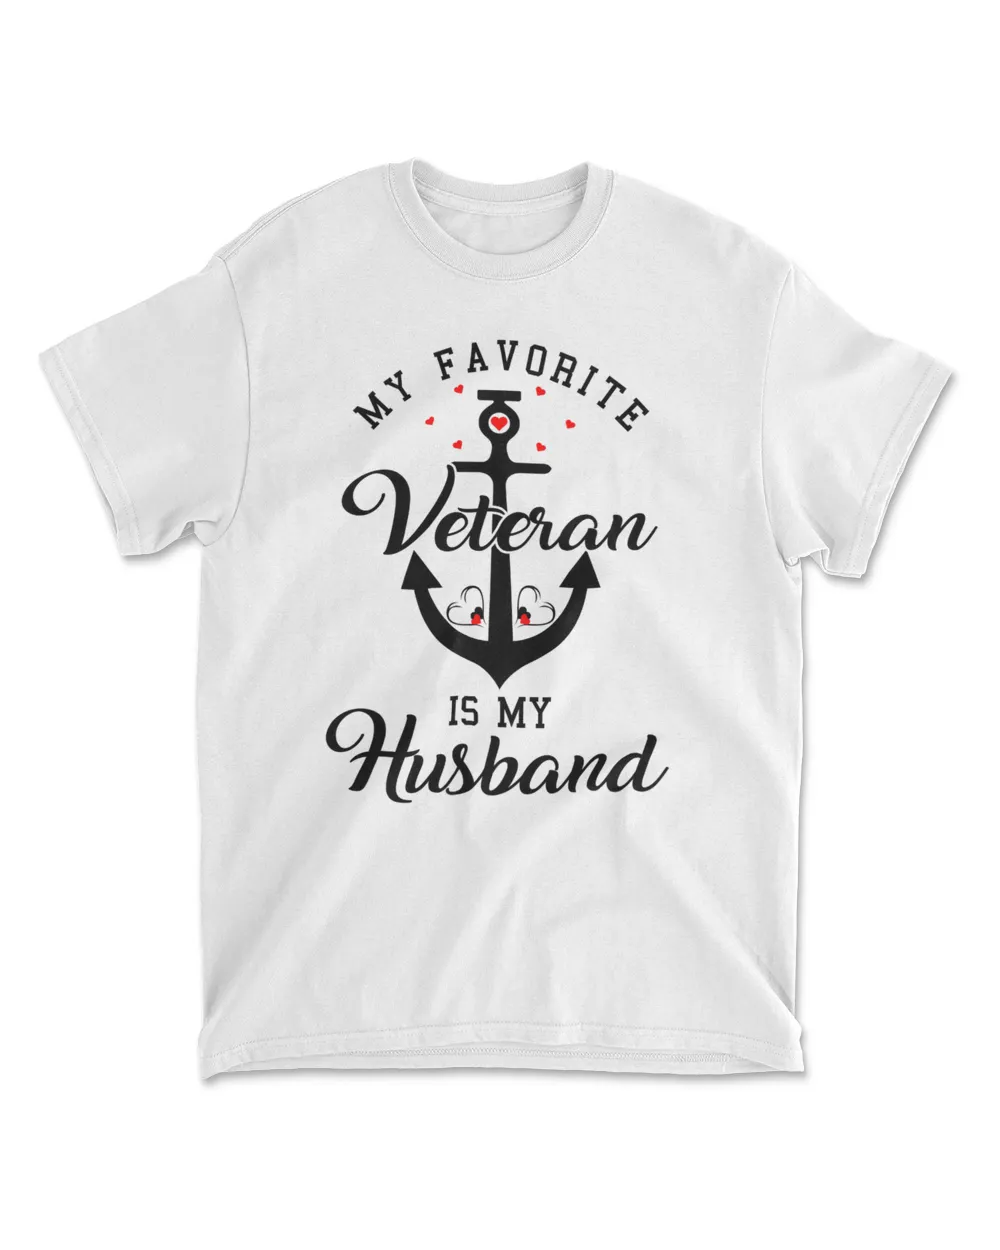 My favorite veteran is my husband t shirt